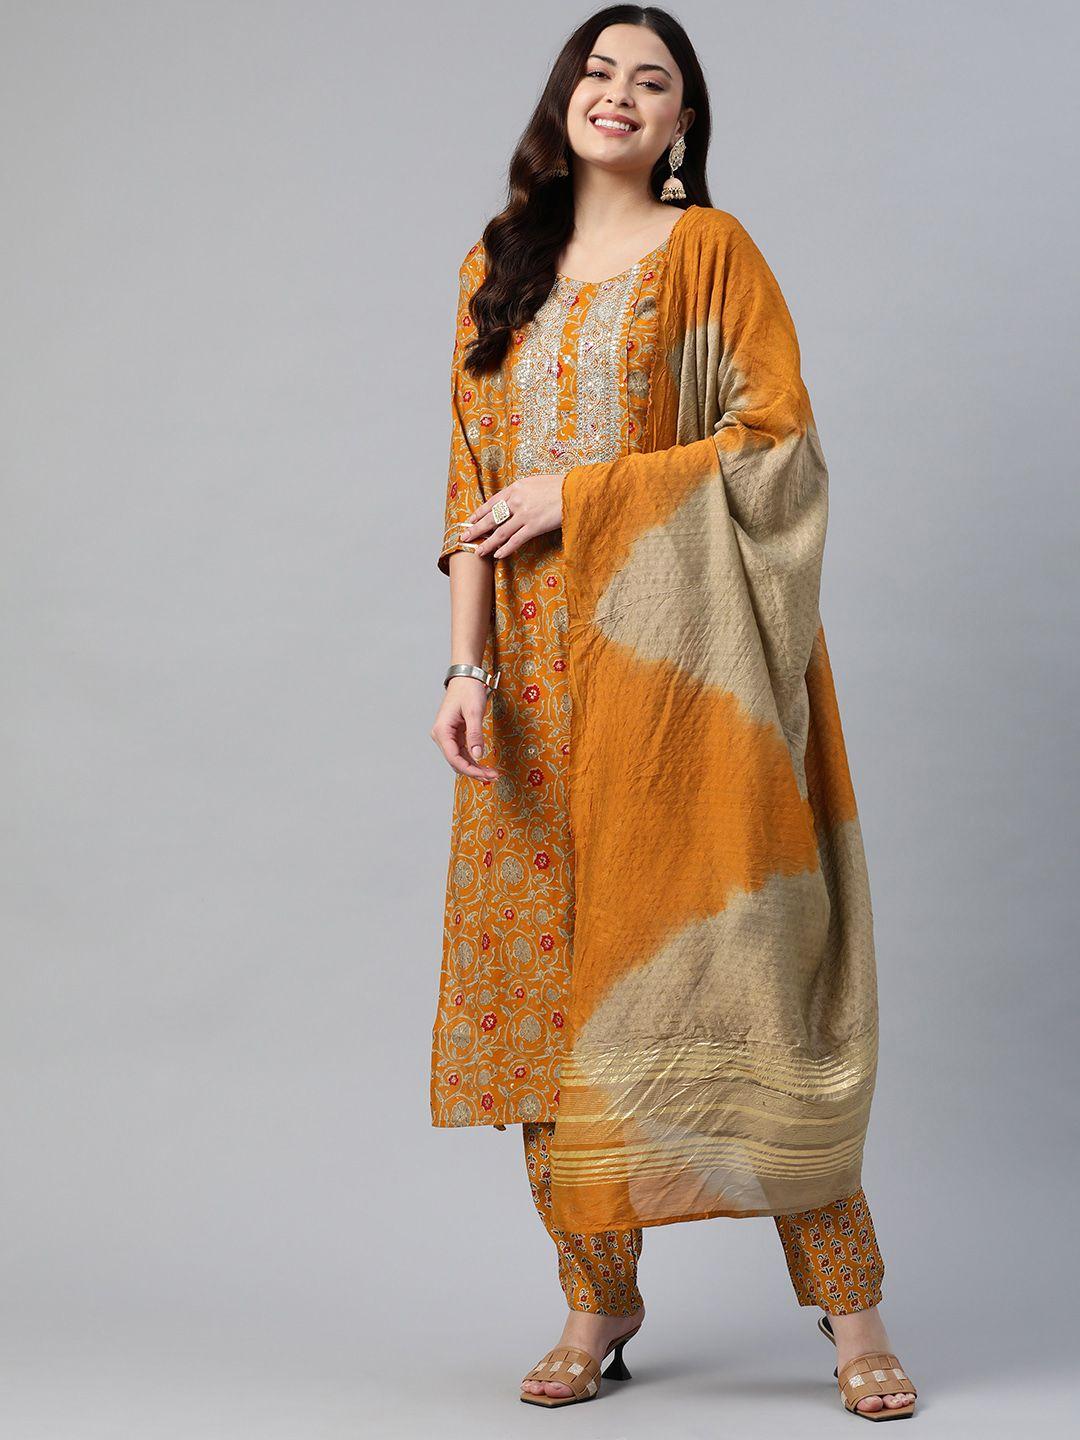 readiprint fashions women mustard yellow floral printed kurta set